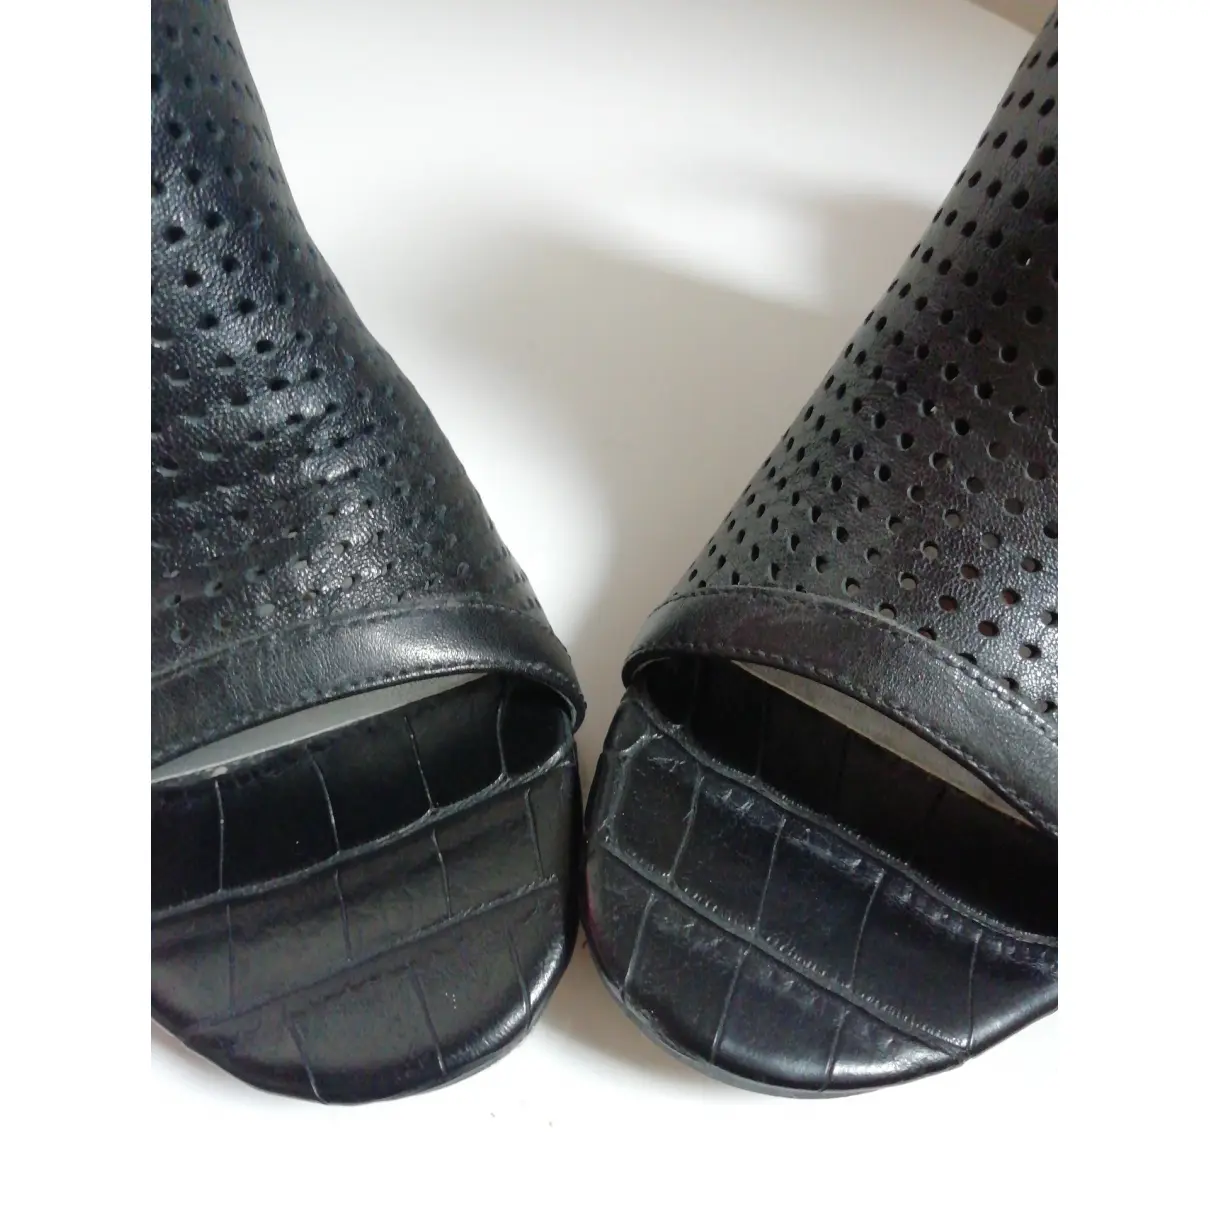 Leather heels Sam Edelman